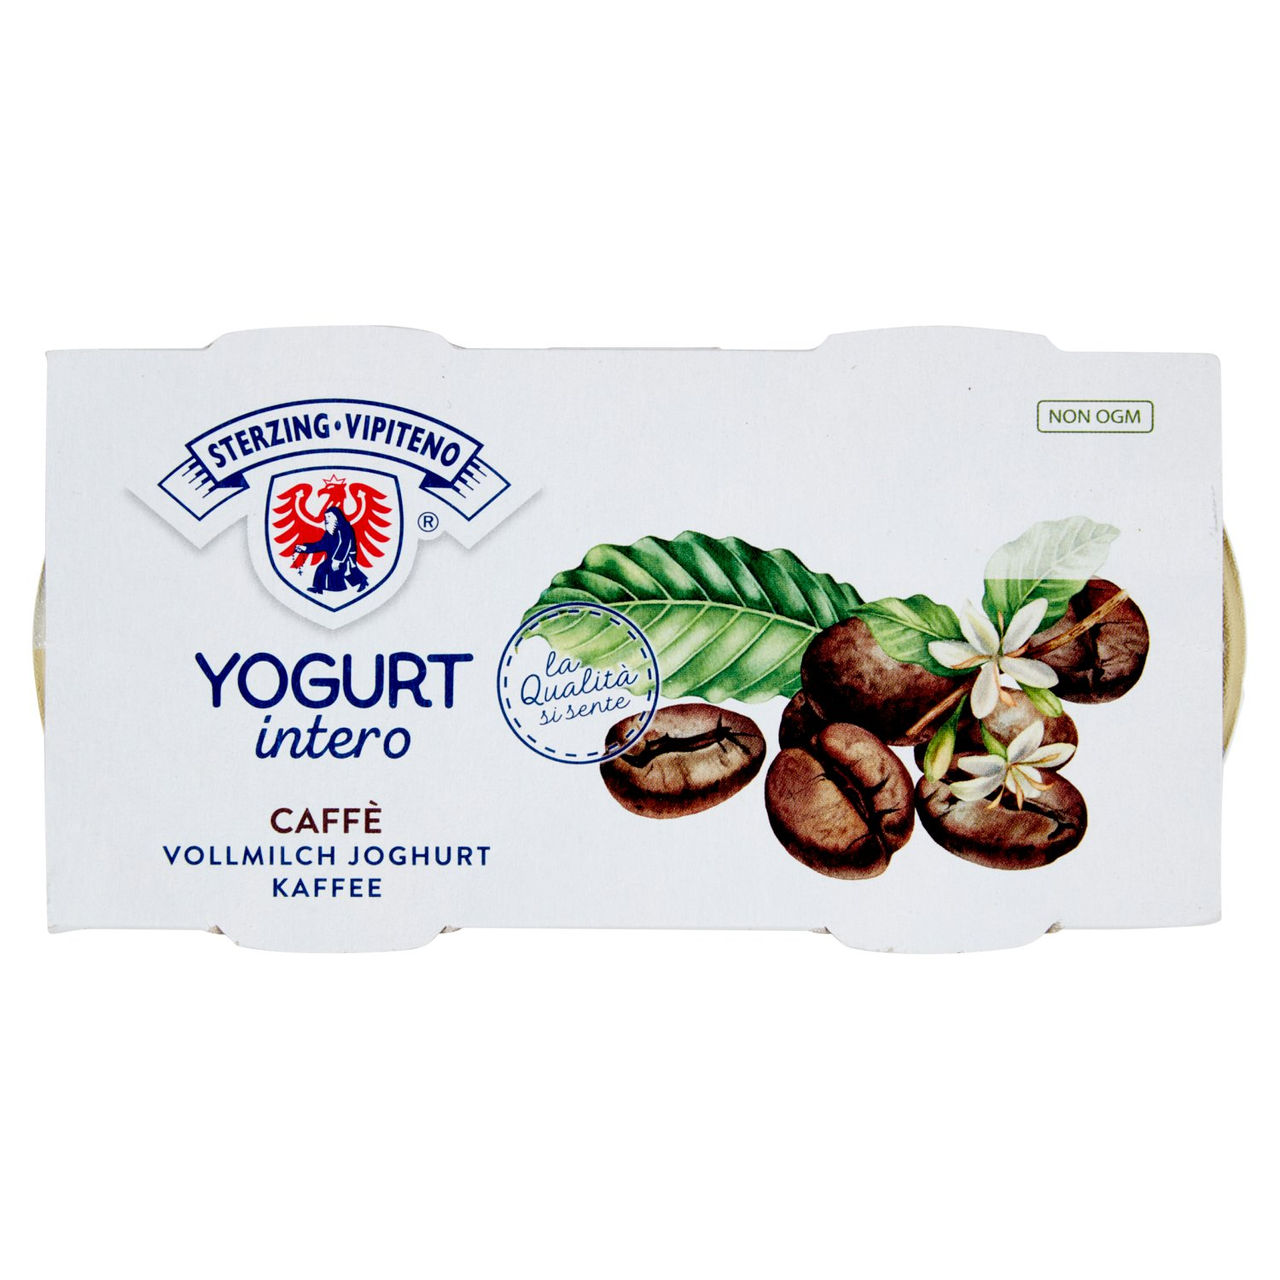 Sterzing Vipiteno Yogurt Caffè in vendita online